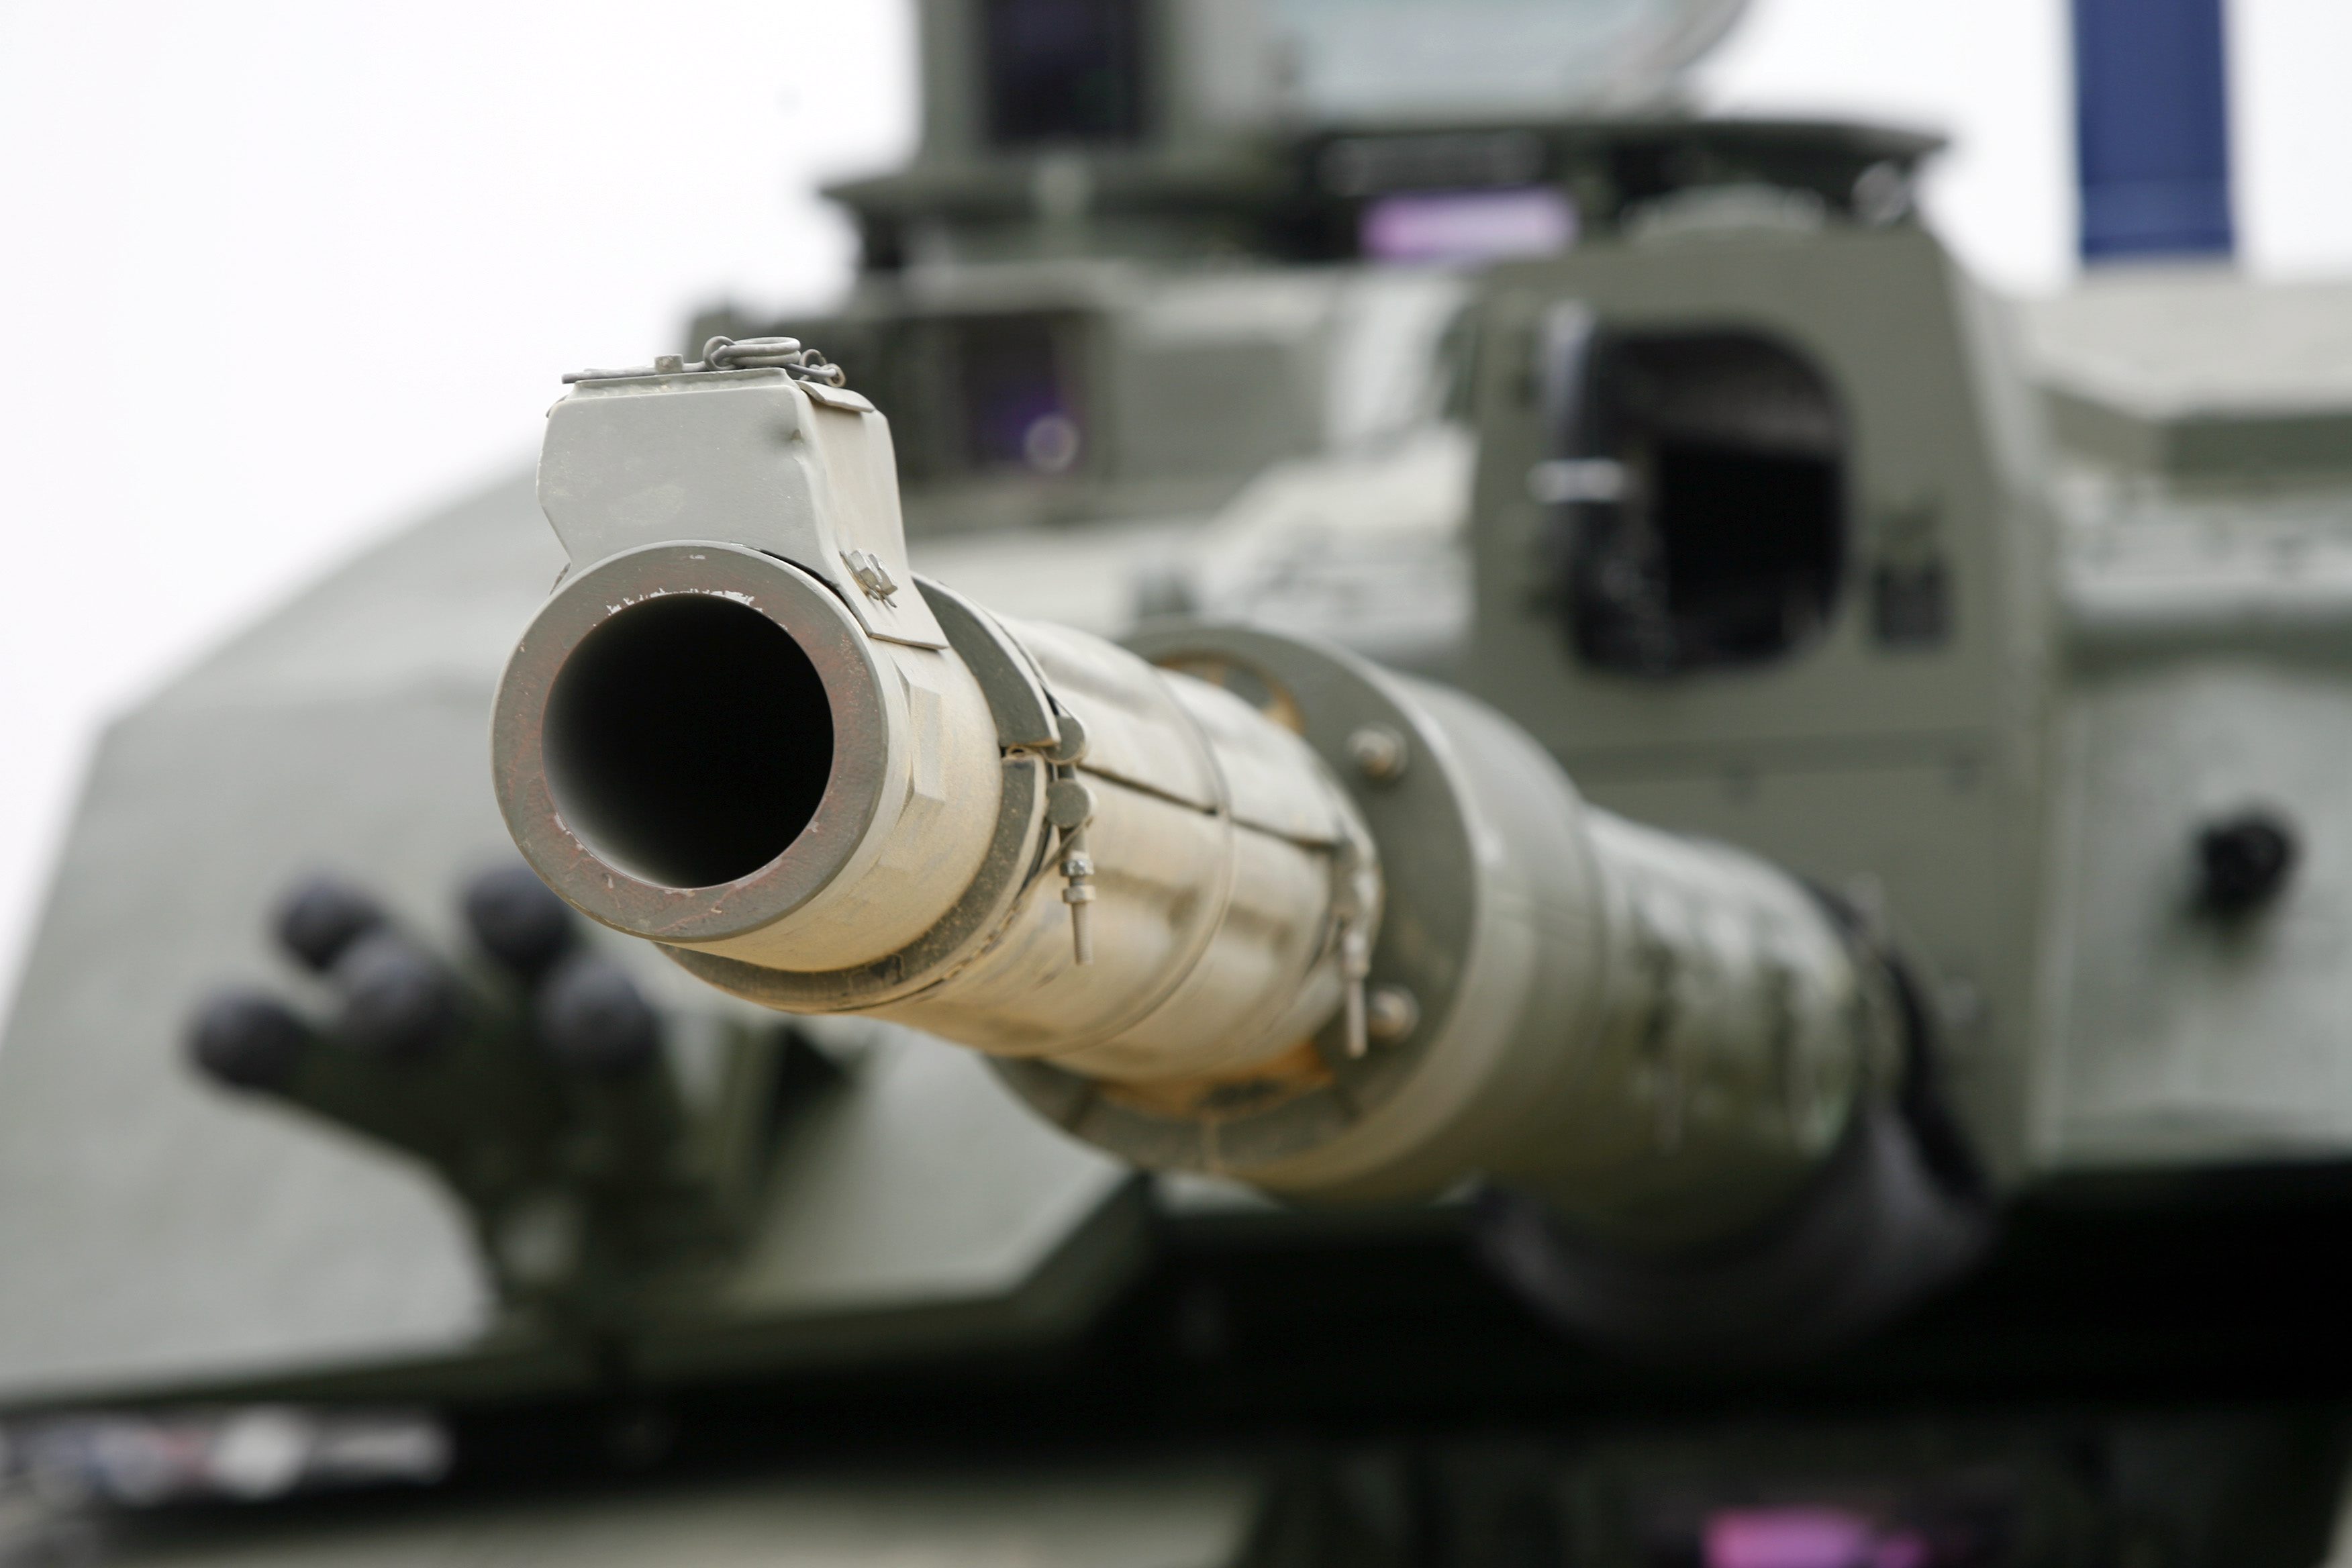 The_120mm_smooth_bore_tank_gun,_looking_down_the_barrel._MOD_45146593.jpg